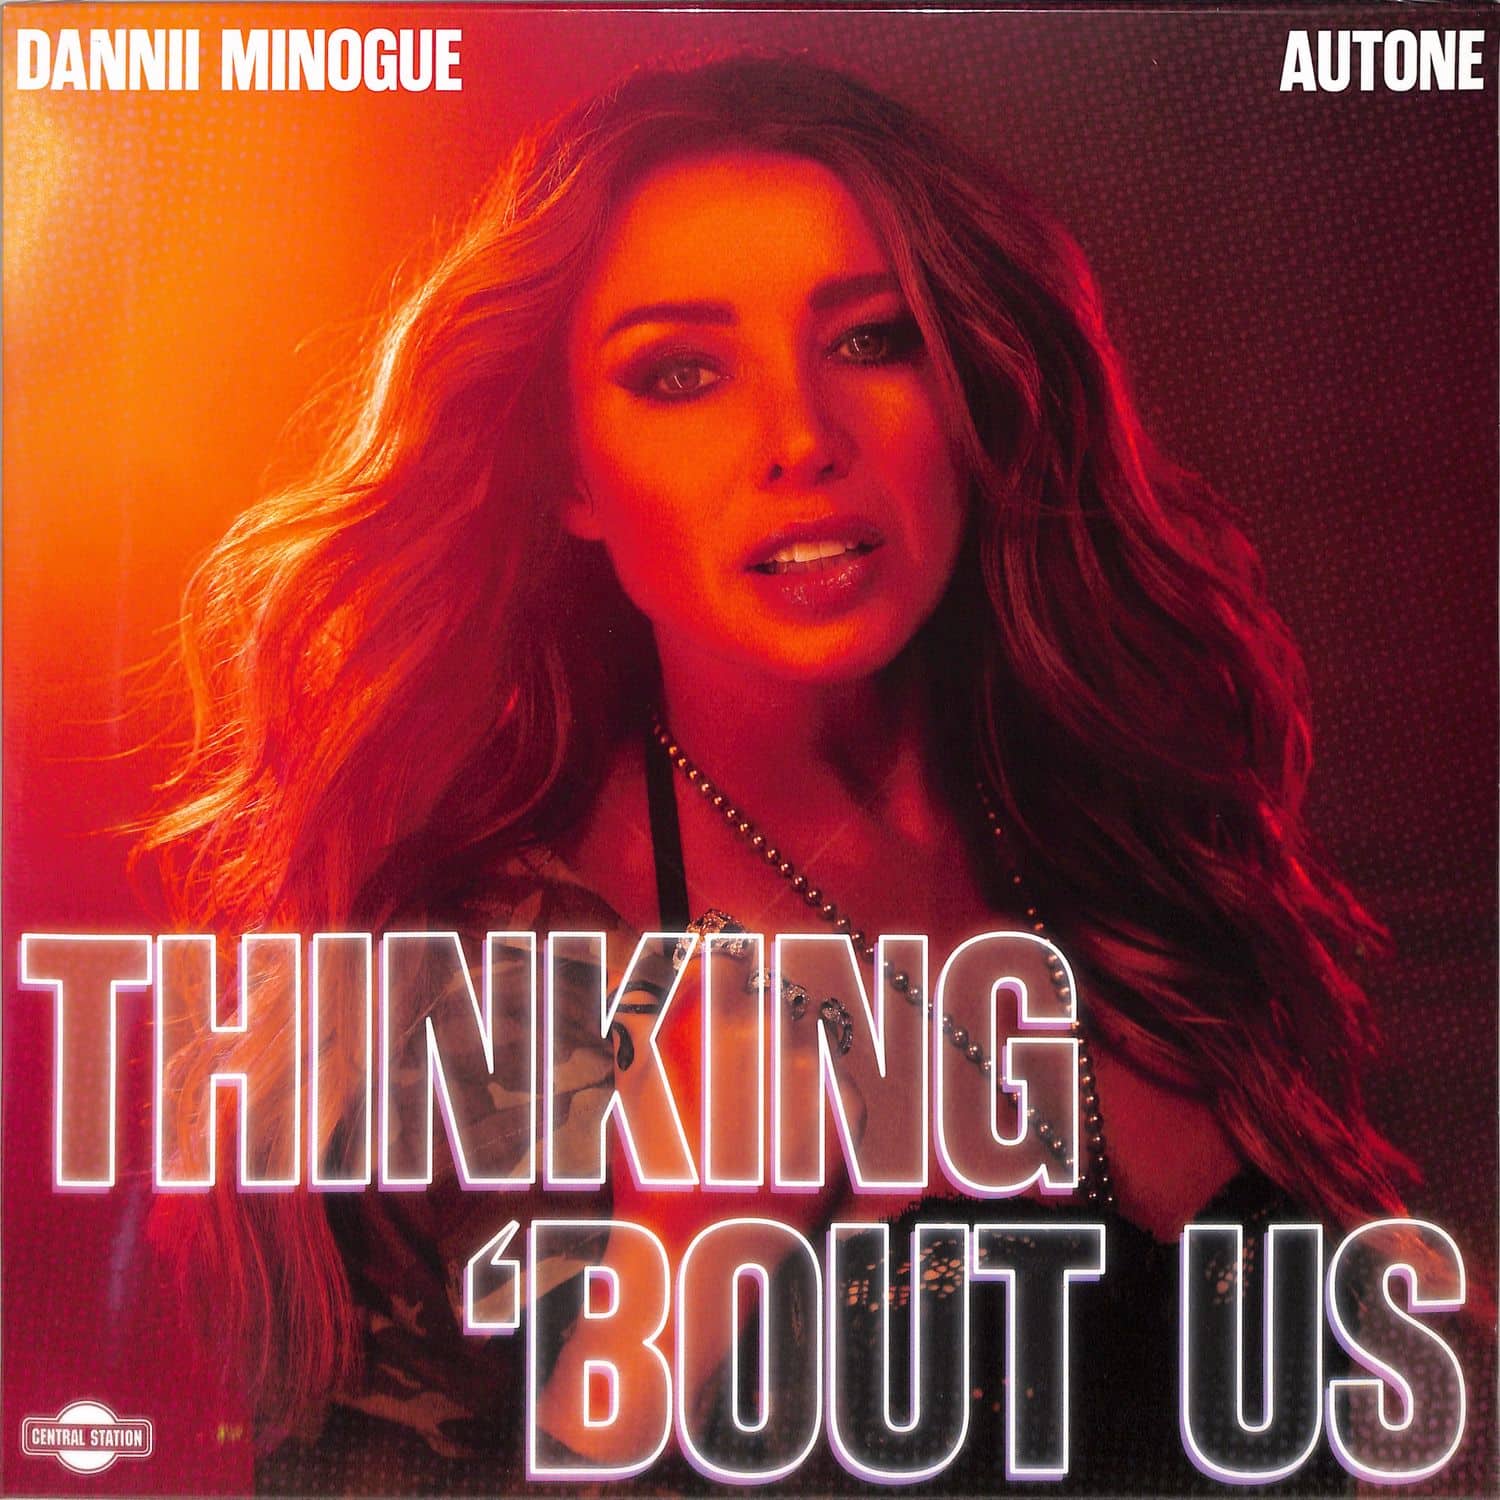 Dannii Minogue & Autone - THINKIN BOUT US